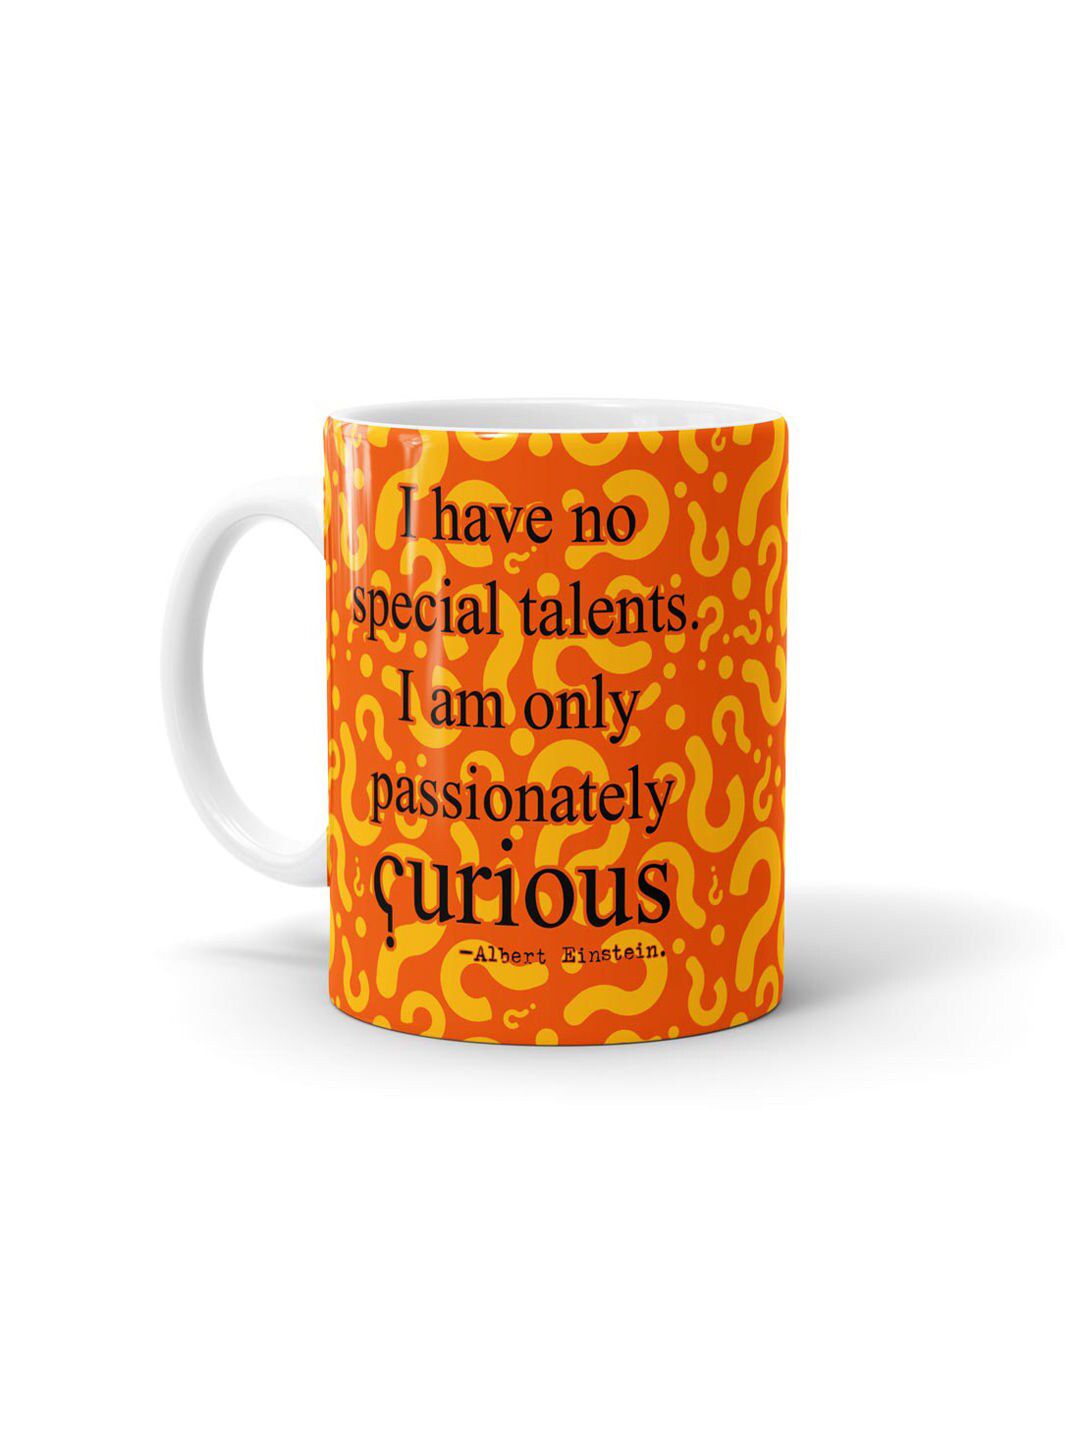 macmerise Black & Orange Curious Albert Einstein Printed Ceramic Glossy Mug Price in India